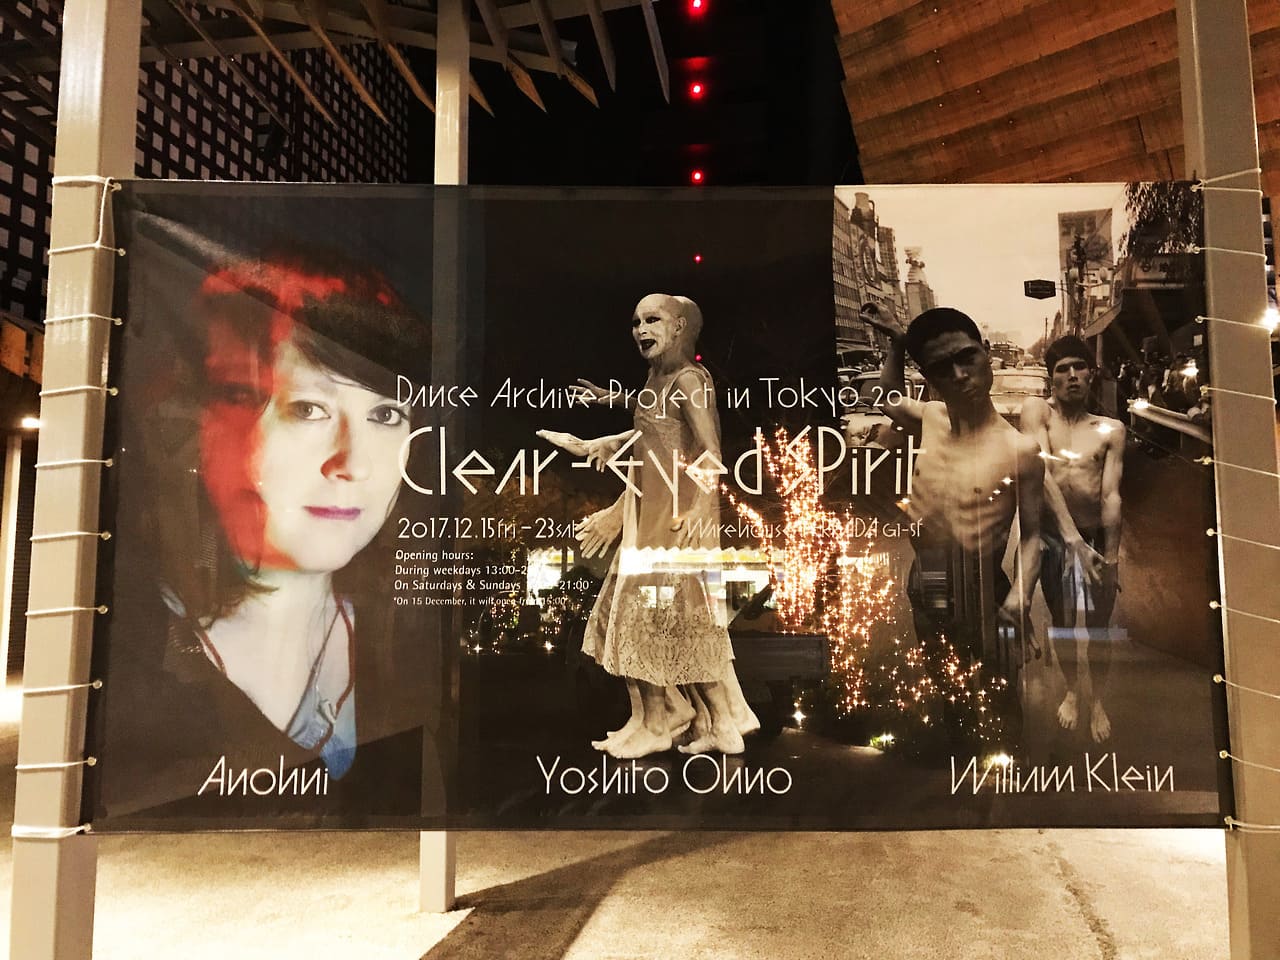 Anohni × Yoshito Ohno Dance Archive Project in Tokyo 2017「たしかな心と眼」